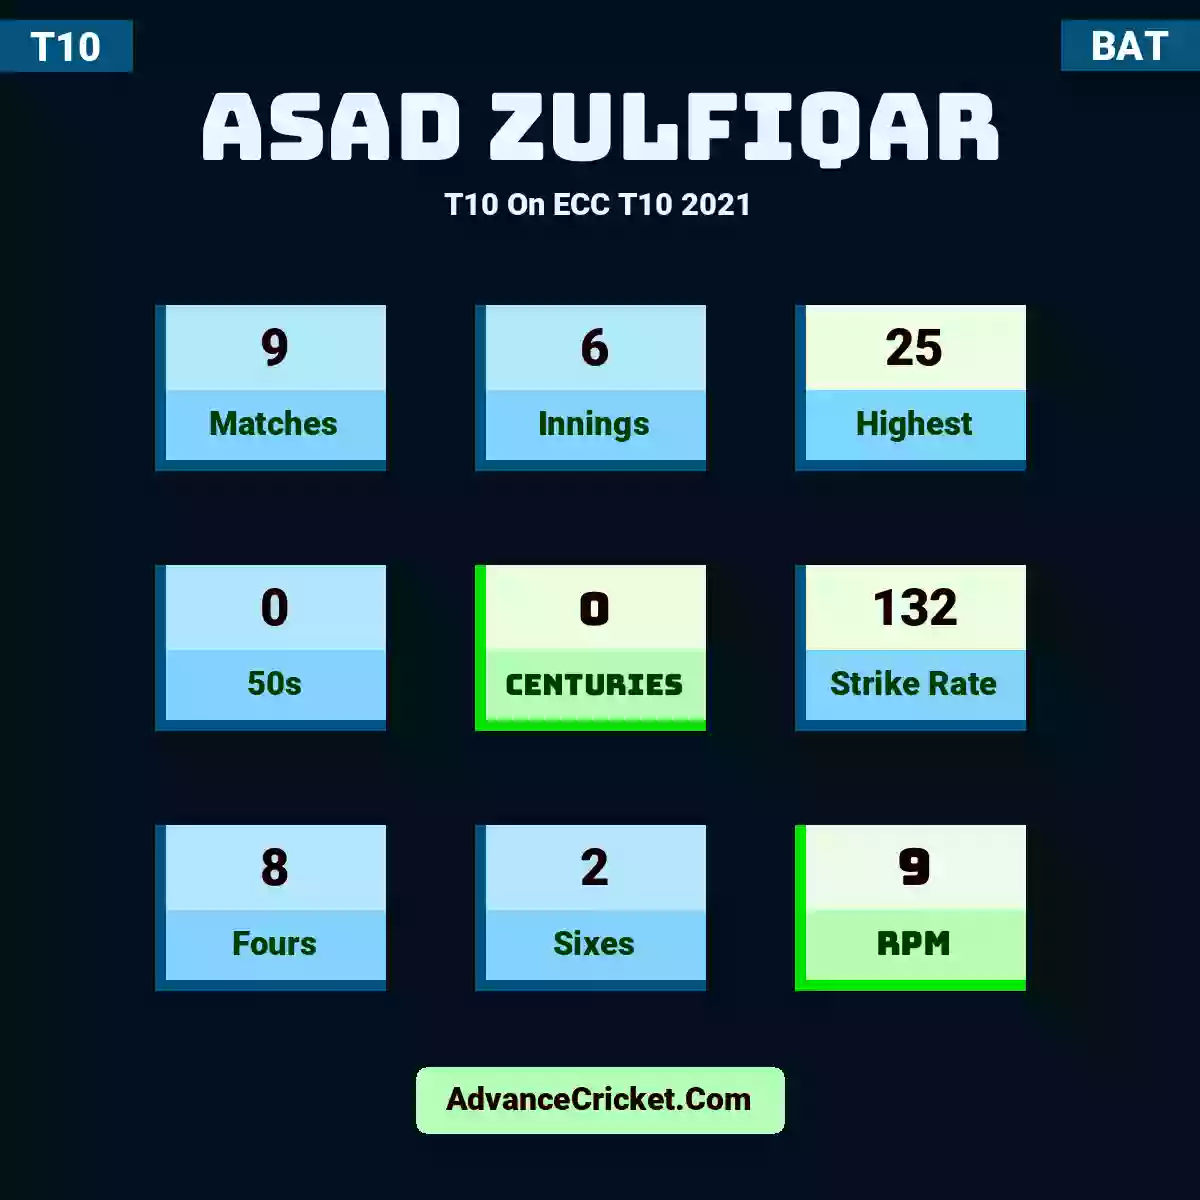 Asad Zulfiqar T10  On ECC T10 2021, Asad Zulfiqar played 9 matches, scored 25 runs as highest, 0 half-centuries, and 0 centuries, with a strike rate of 132. A.Zulfiqar hit 8 fours and 2 sixes, with an RPM of 9.